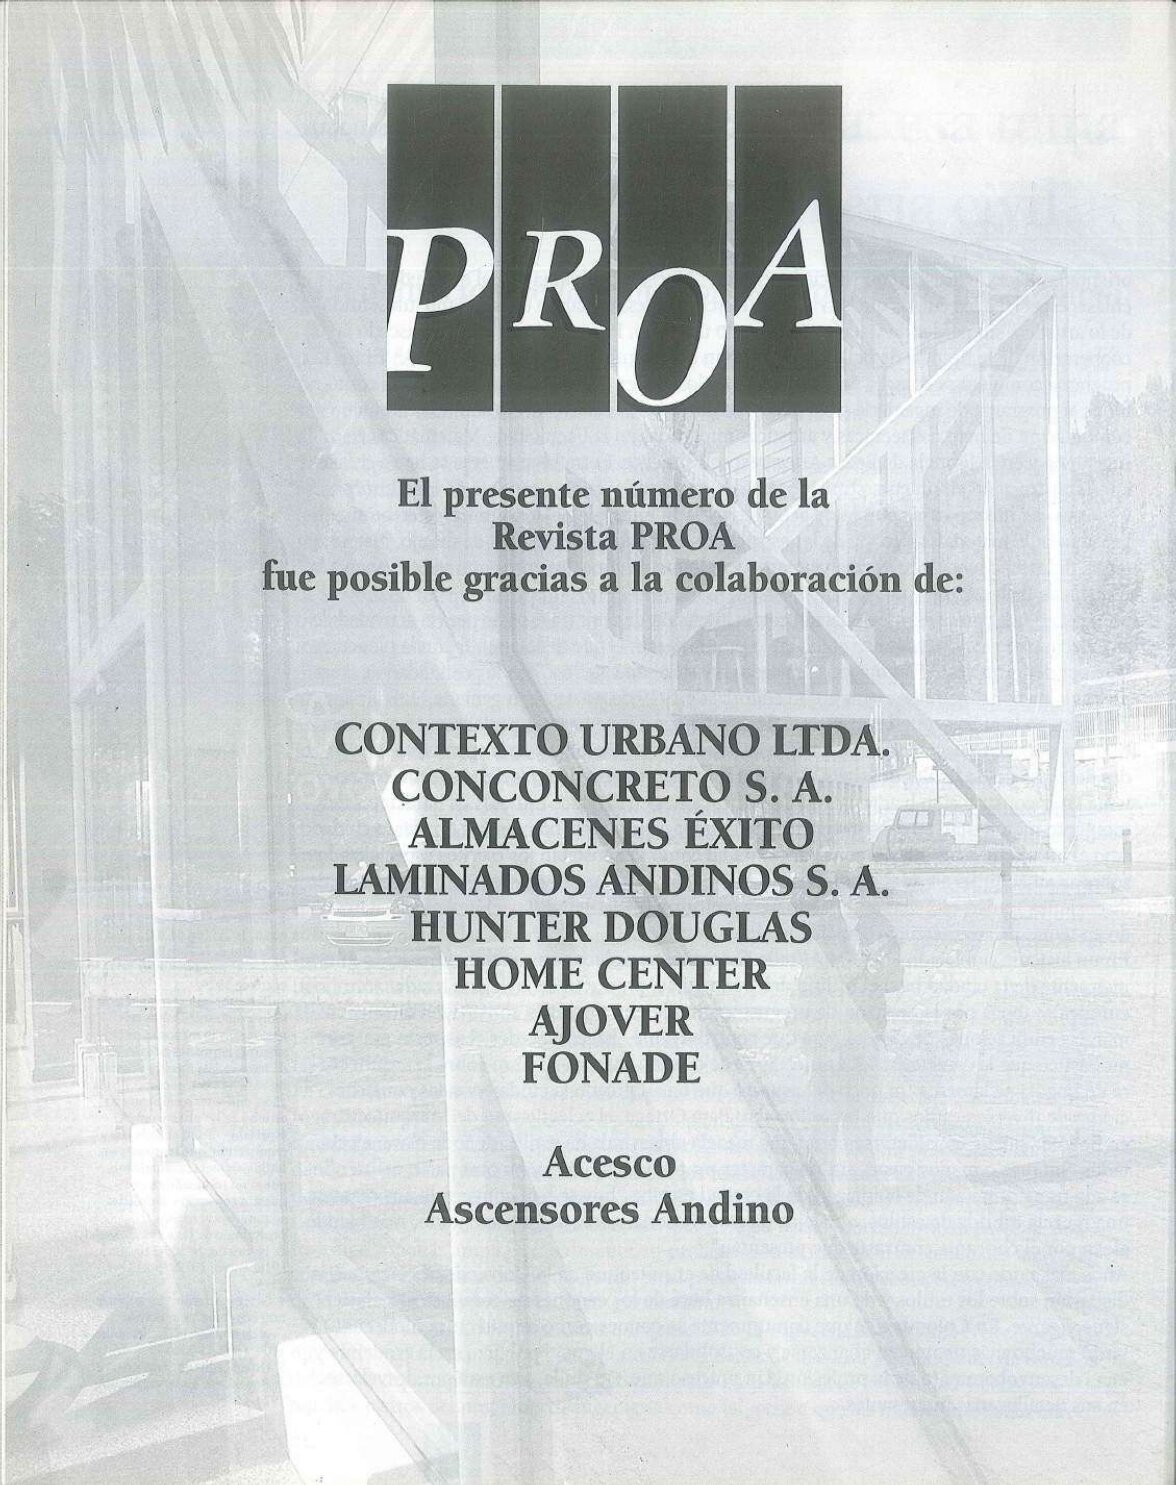 2002_Contexto Urbano- Obra reciente 1995-2002. REVISTA PROA 1_compressed (1)_page-0094.jpg